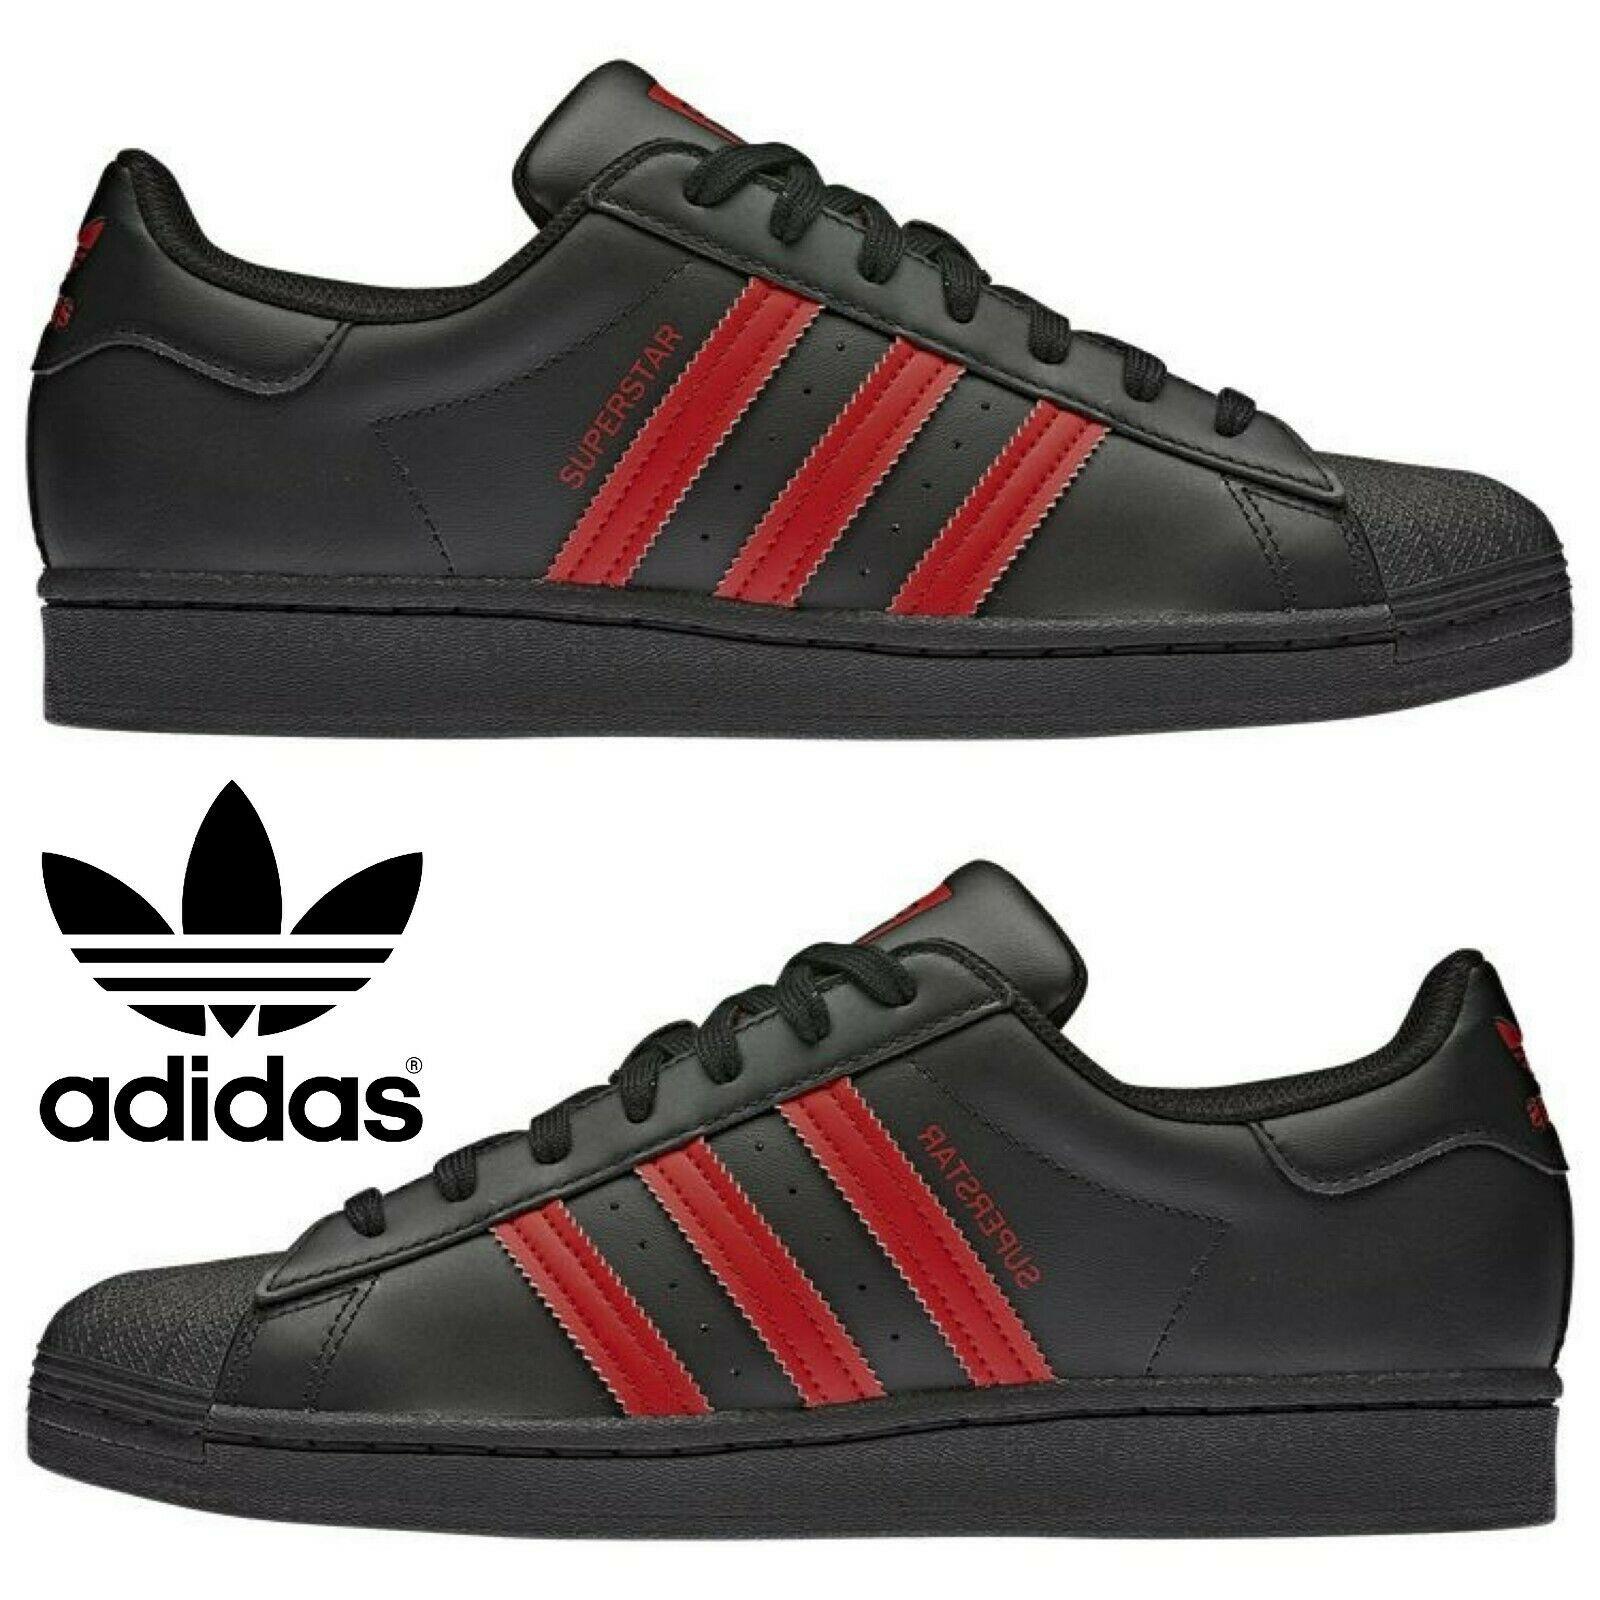 Adidas Originals Superstar Men`s Sneakers Comfort Sport Casual Shoes Black Red